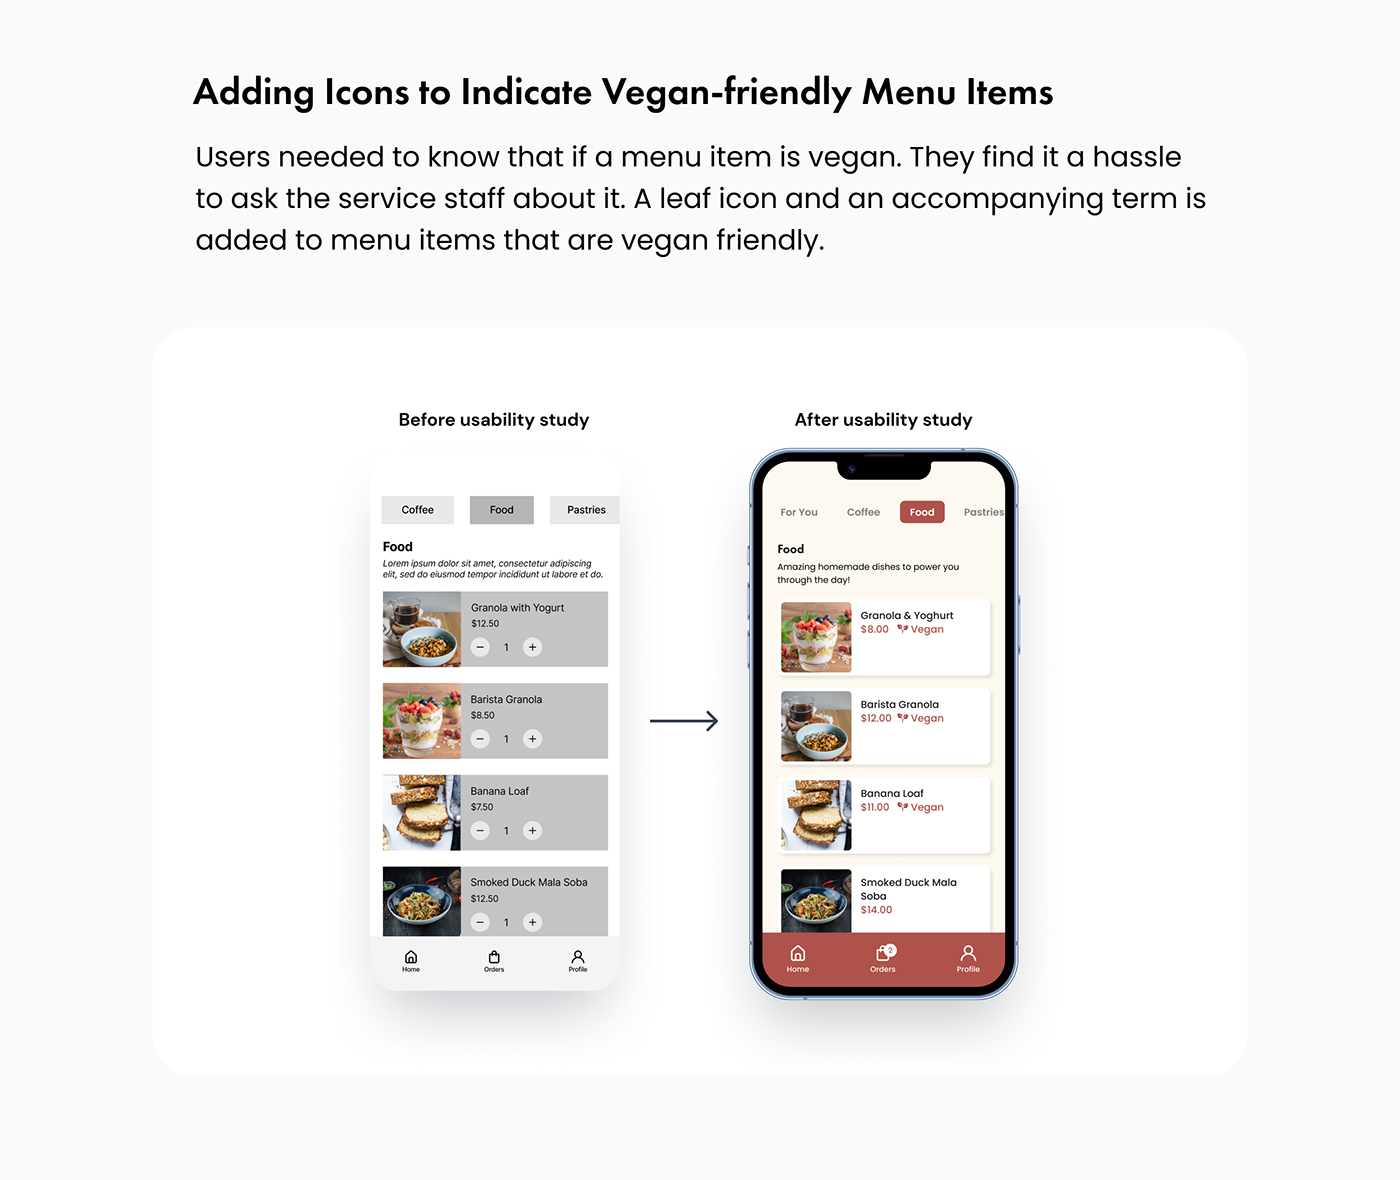 Figma menu app design mobile app design percolate UI/UX Design user experience user interface